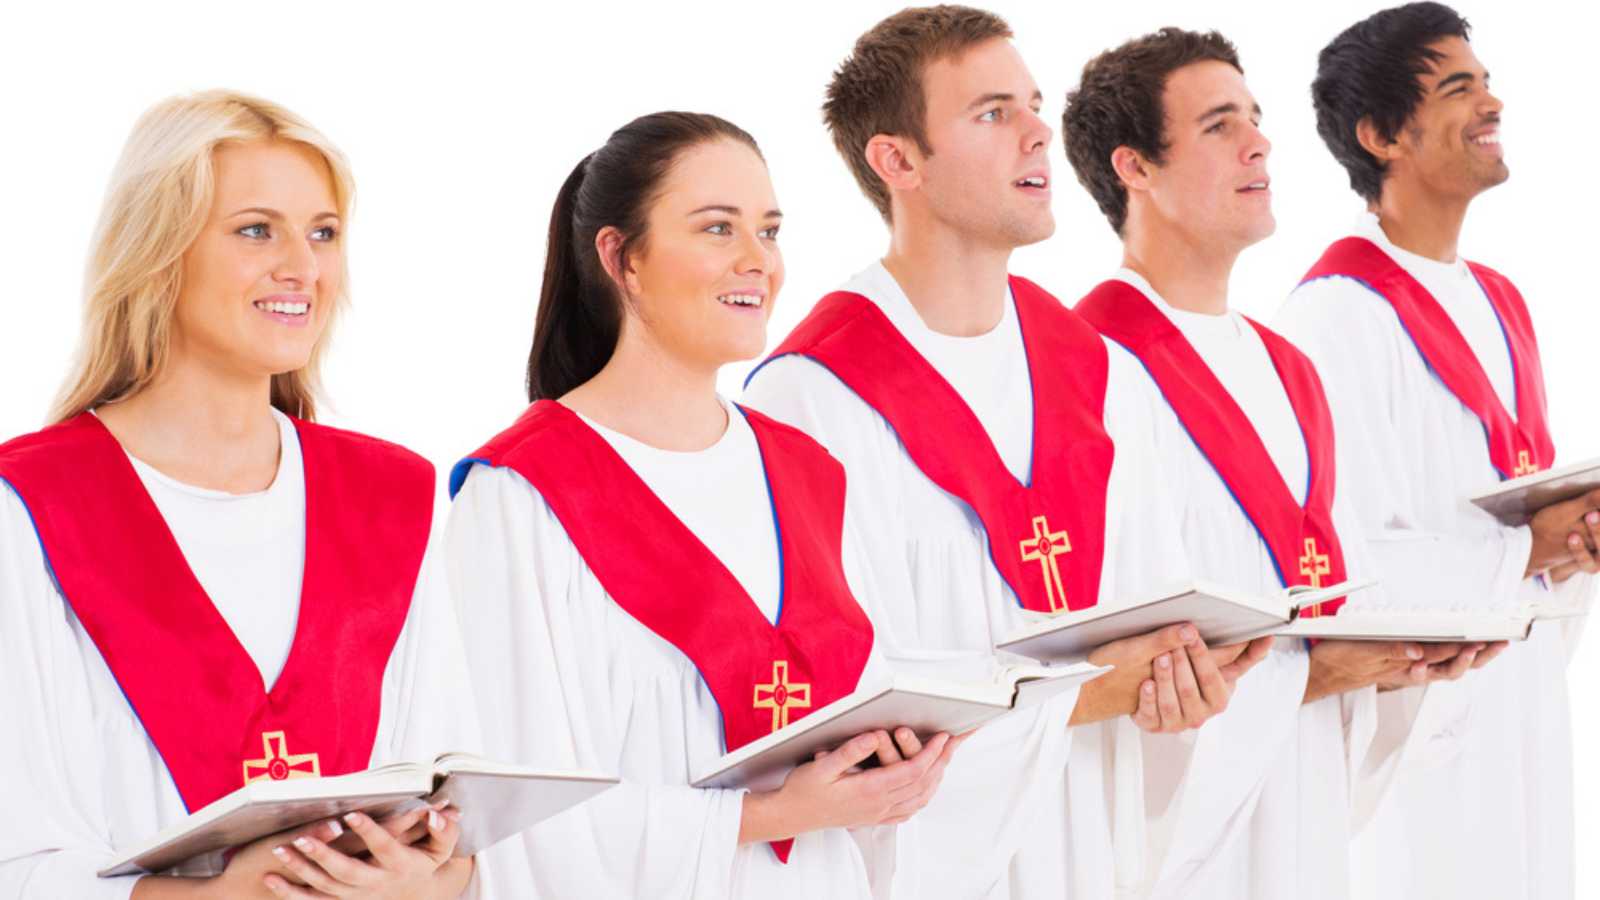 church choir members holding hymn books and singing